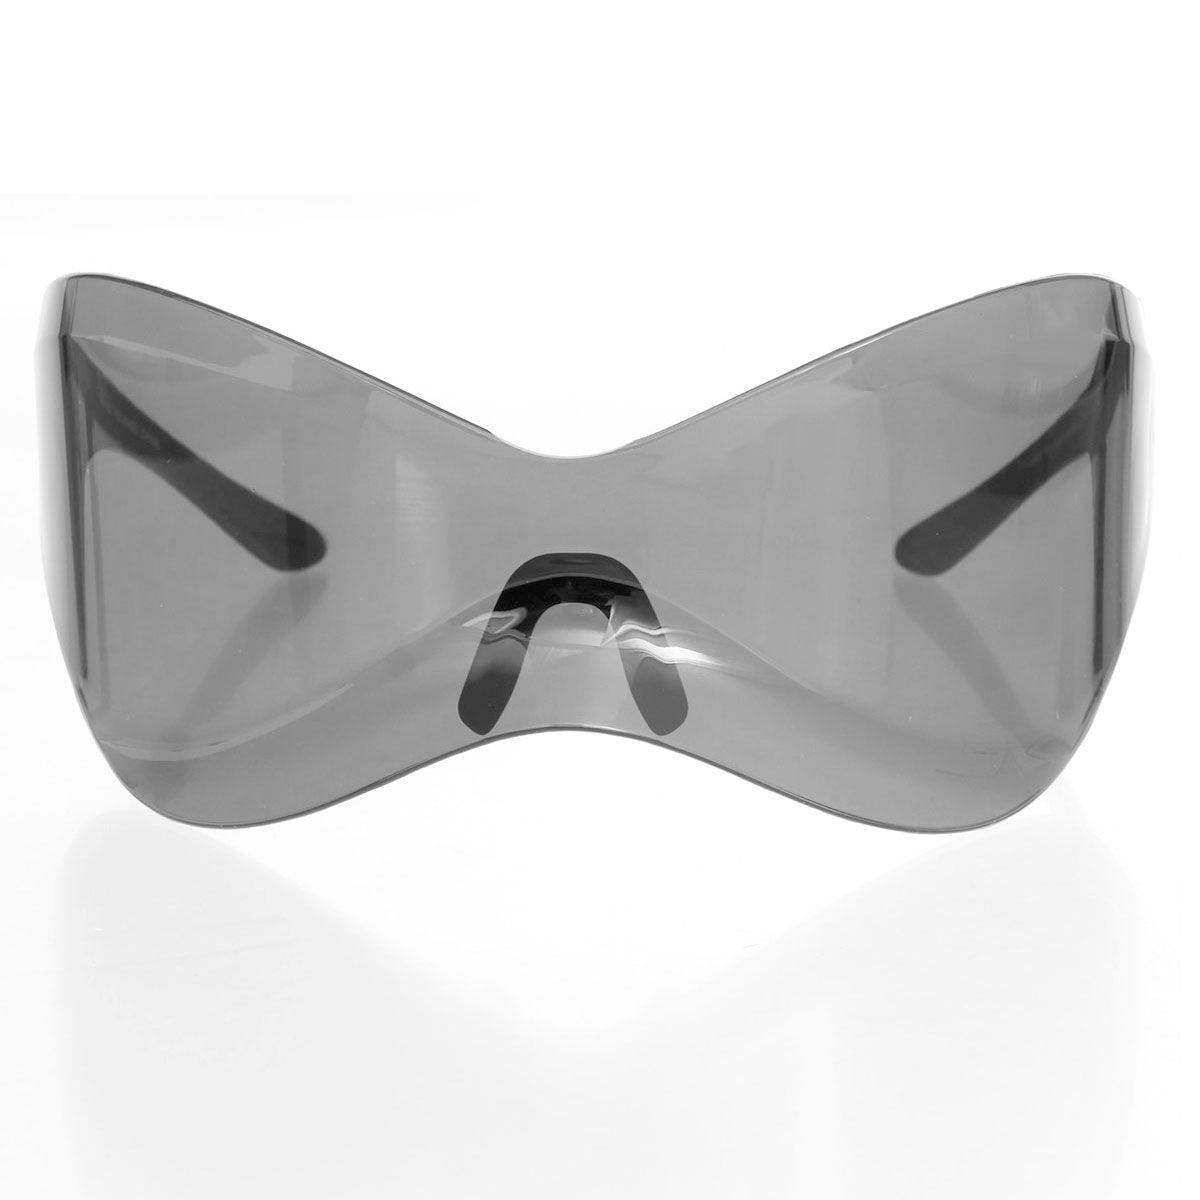 Shop Women's Black Oversized Shield Visor Sunglasses for a Bold Look